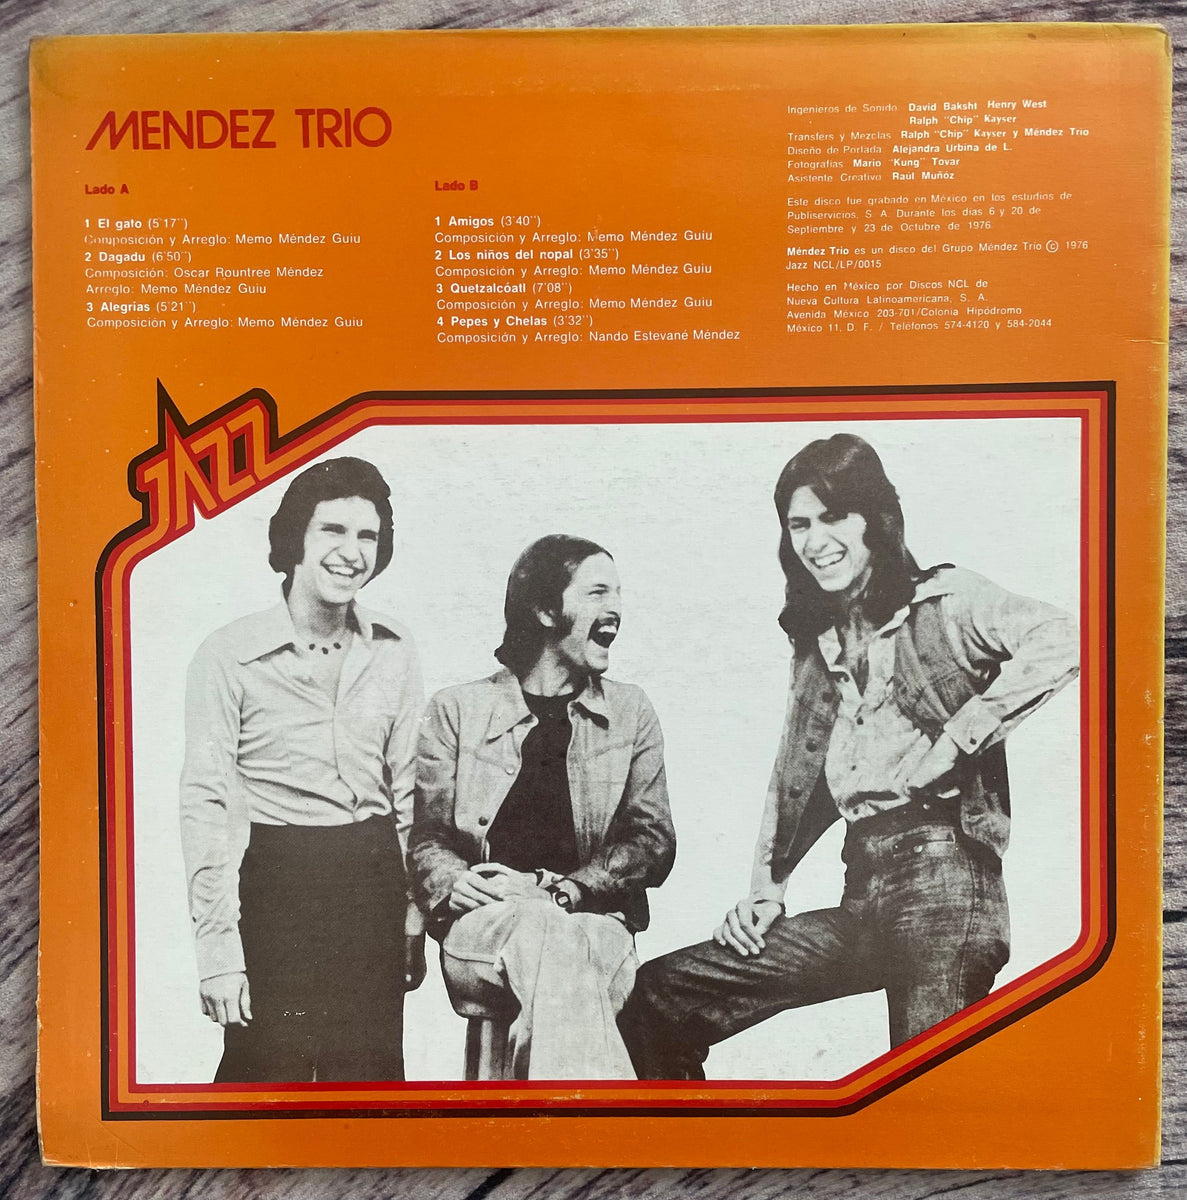 Mendez Trio - S.T. – Galapagos Records